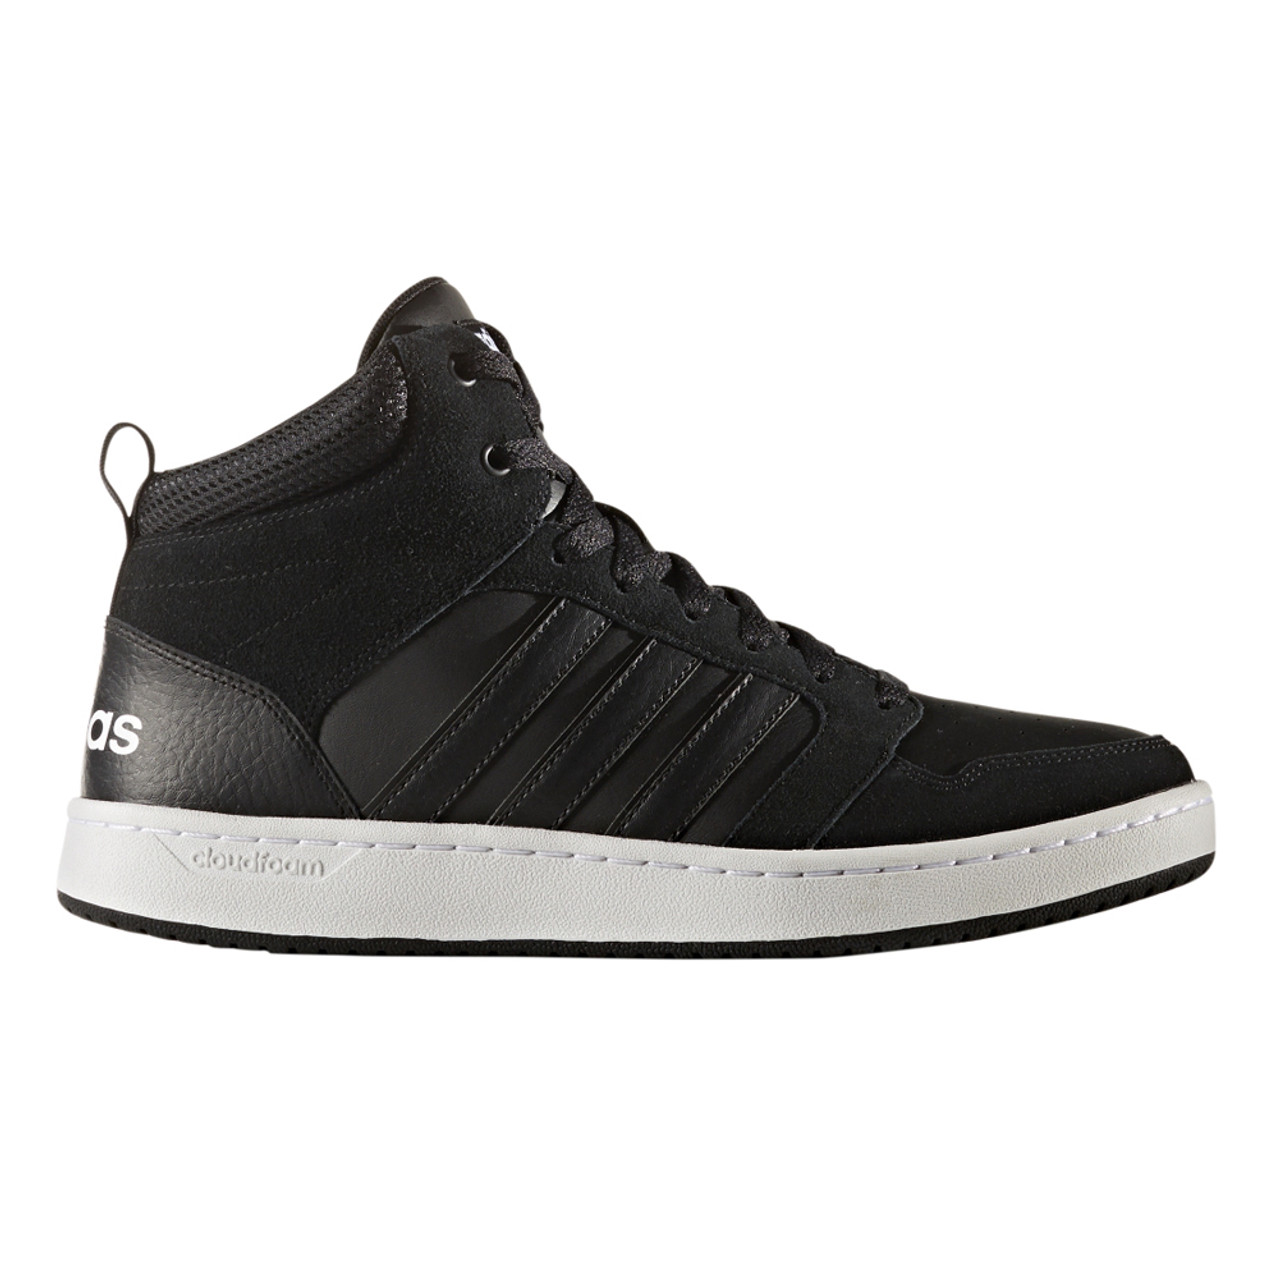 Adidas Men’s LVL 029002 Black/White Basketball Cloudfoam Shoes (Size US 6)